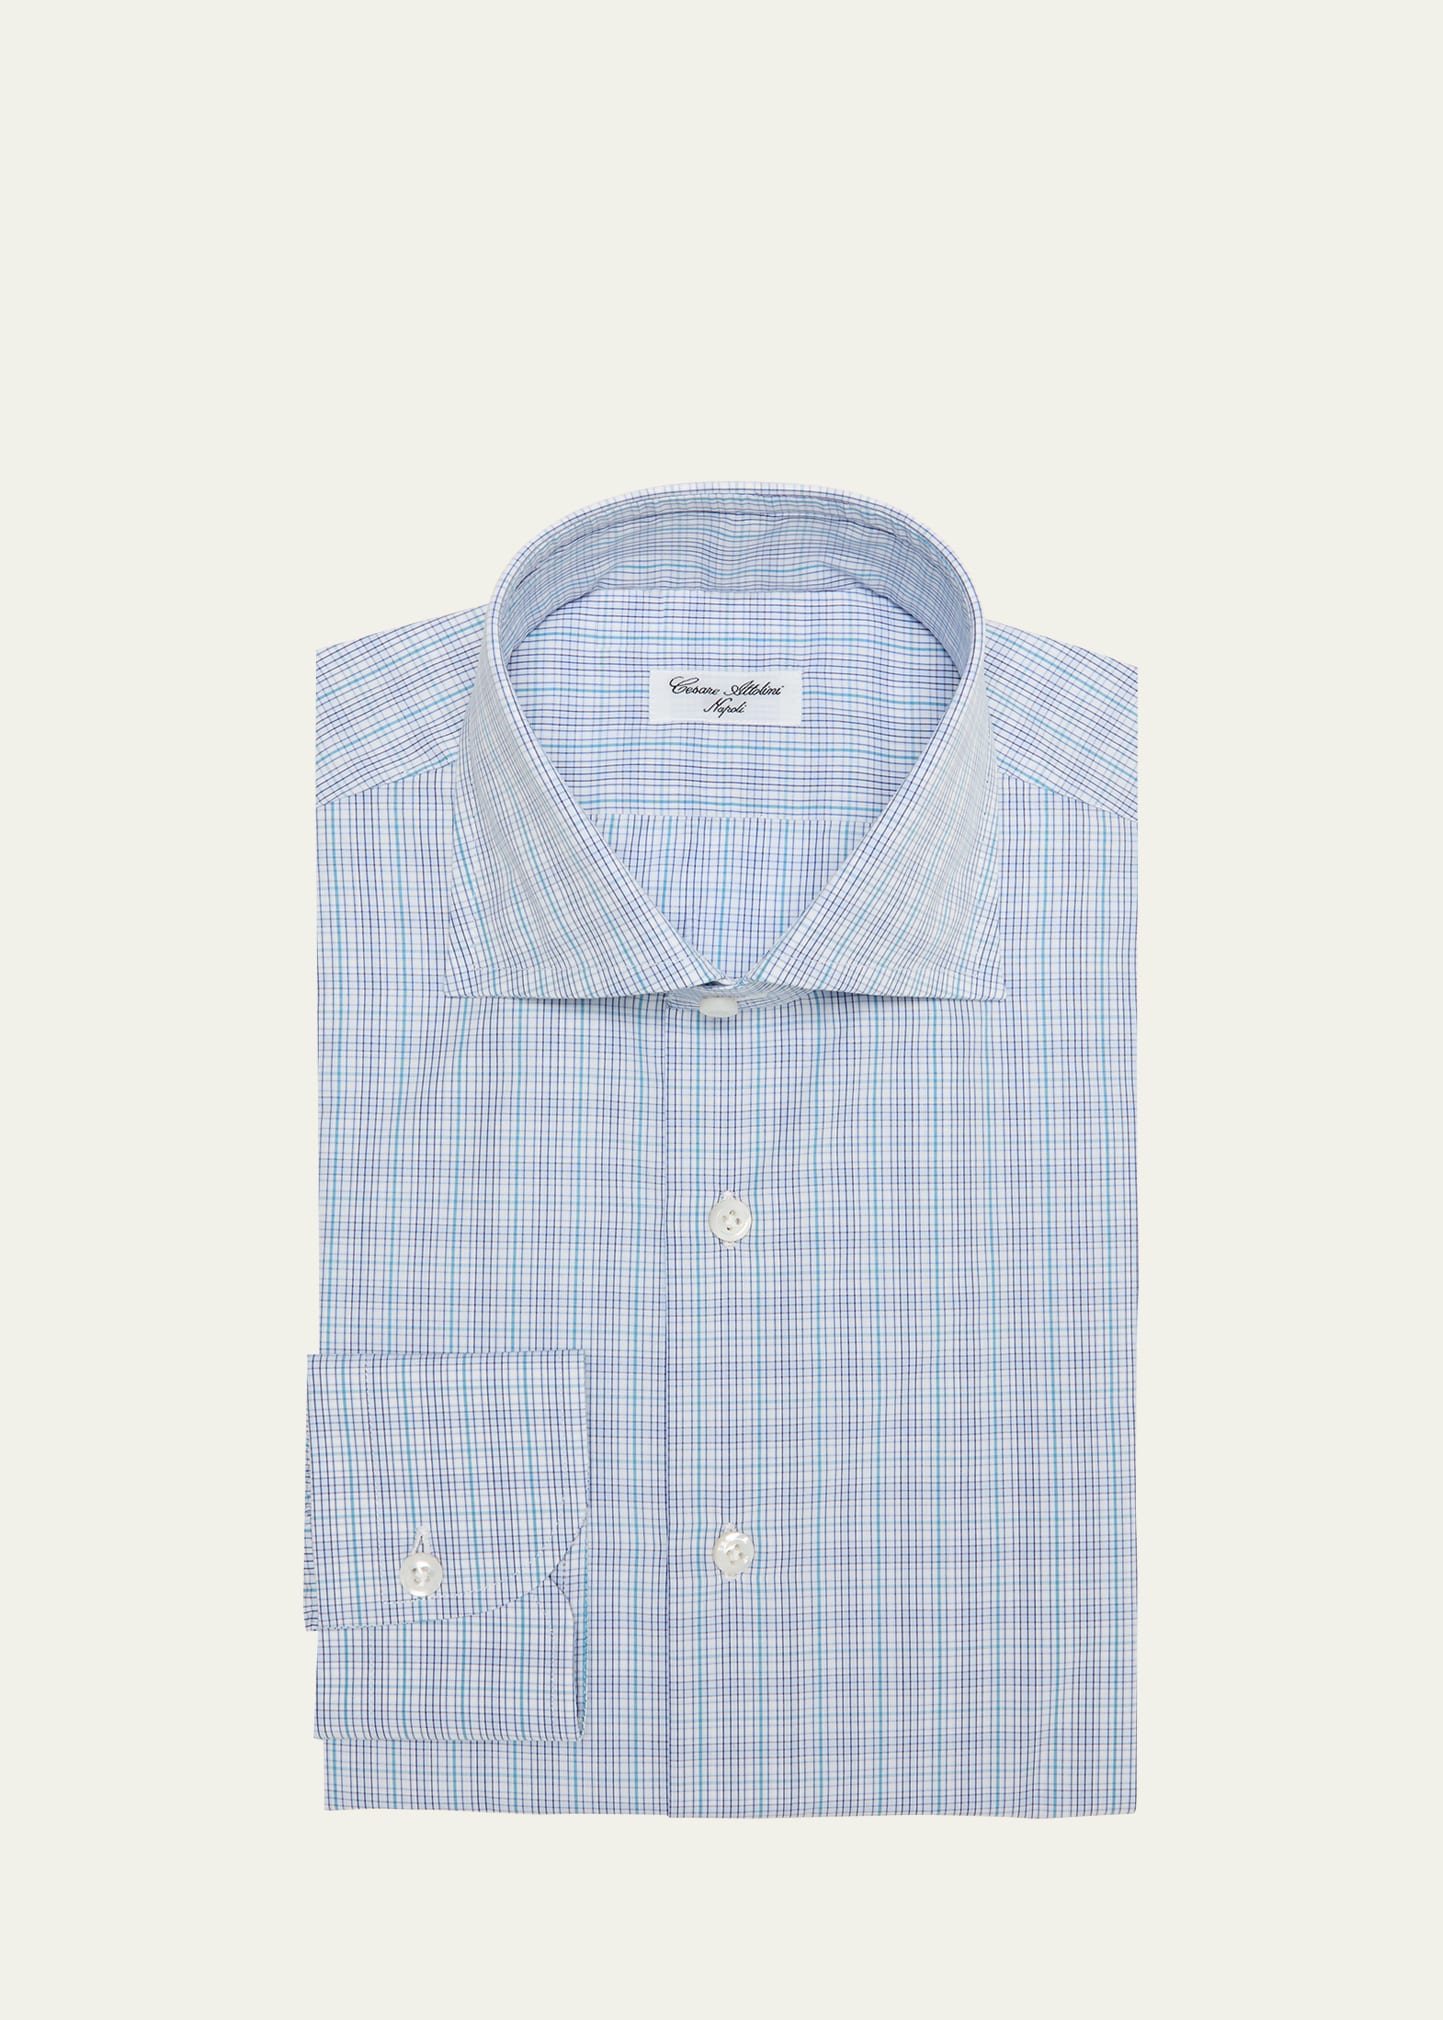 Men's Cotton Multi-Check Dress Shirt